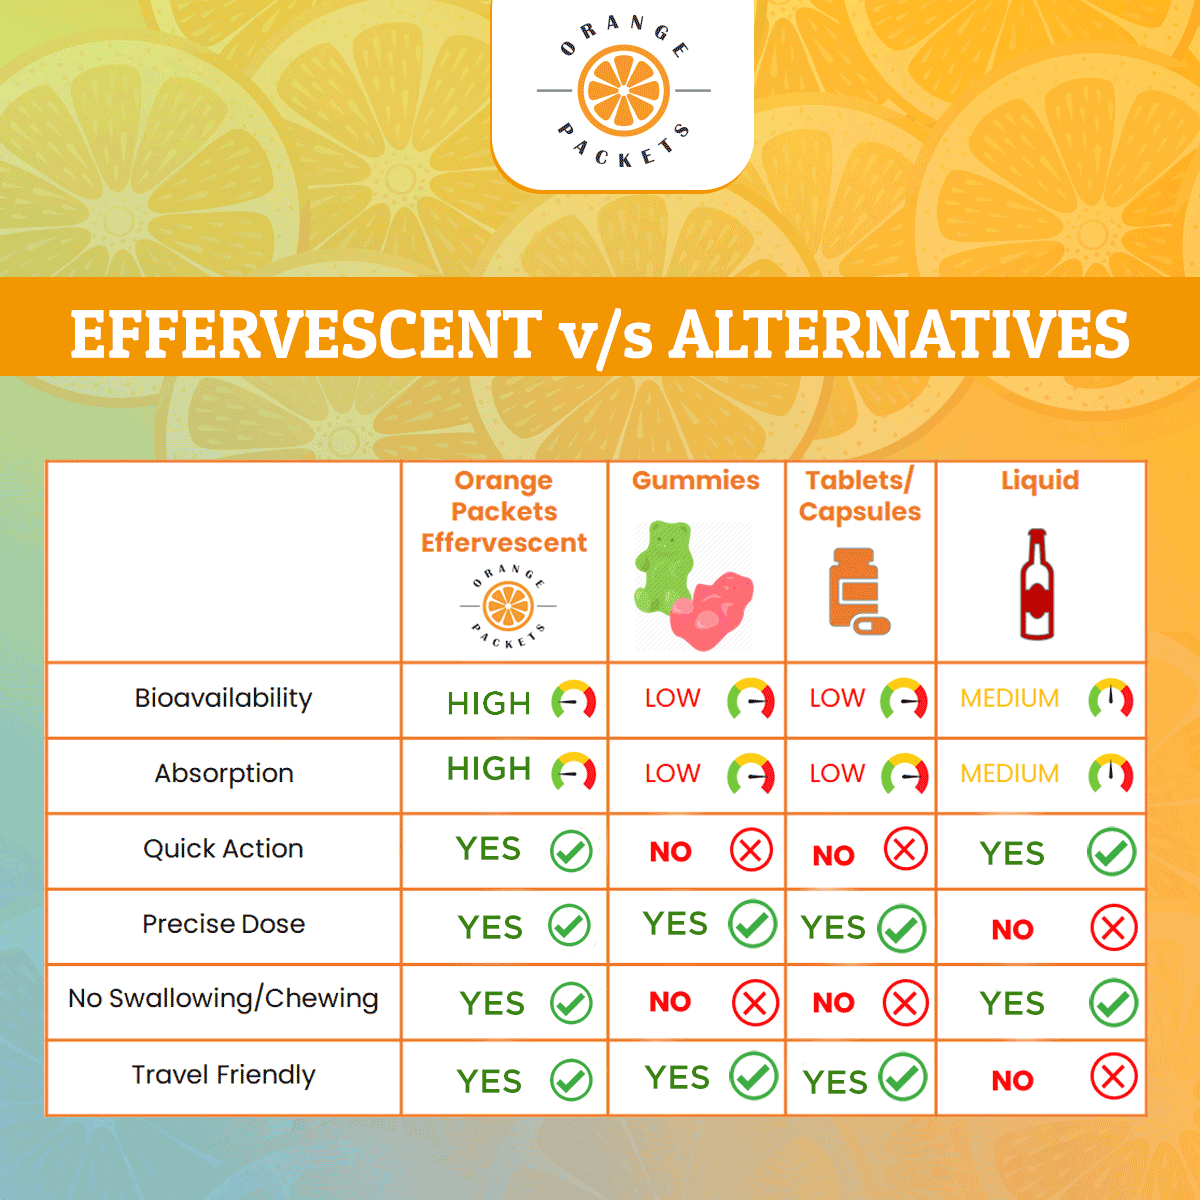 Effervescent vs alternatives